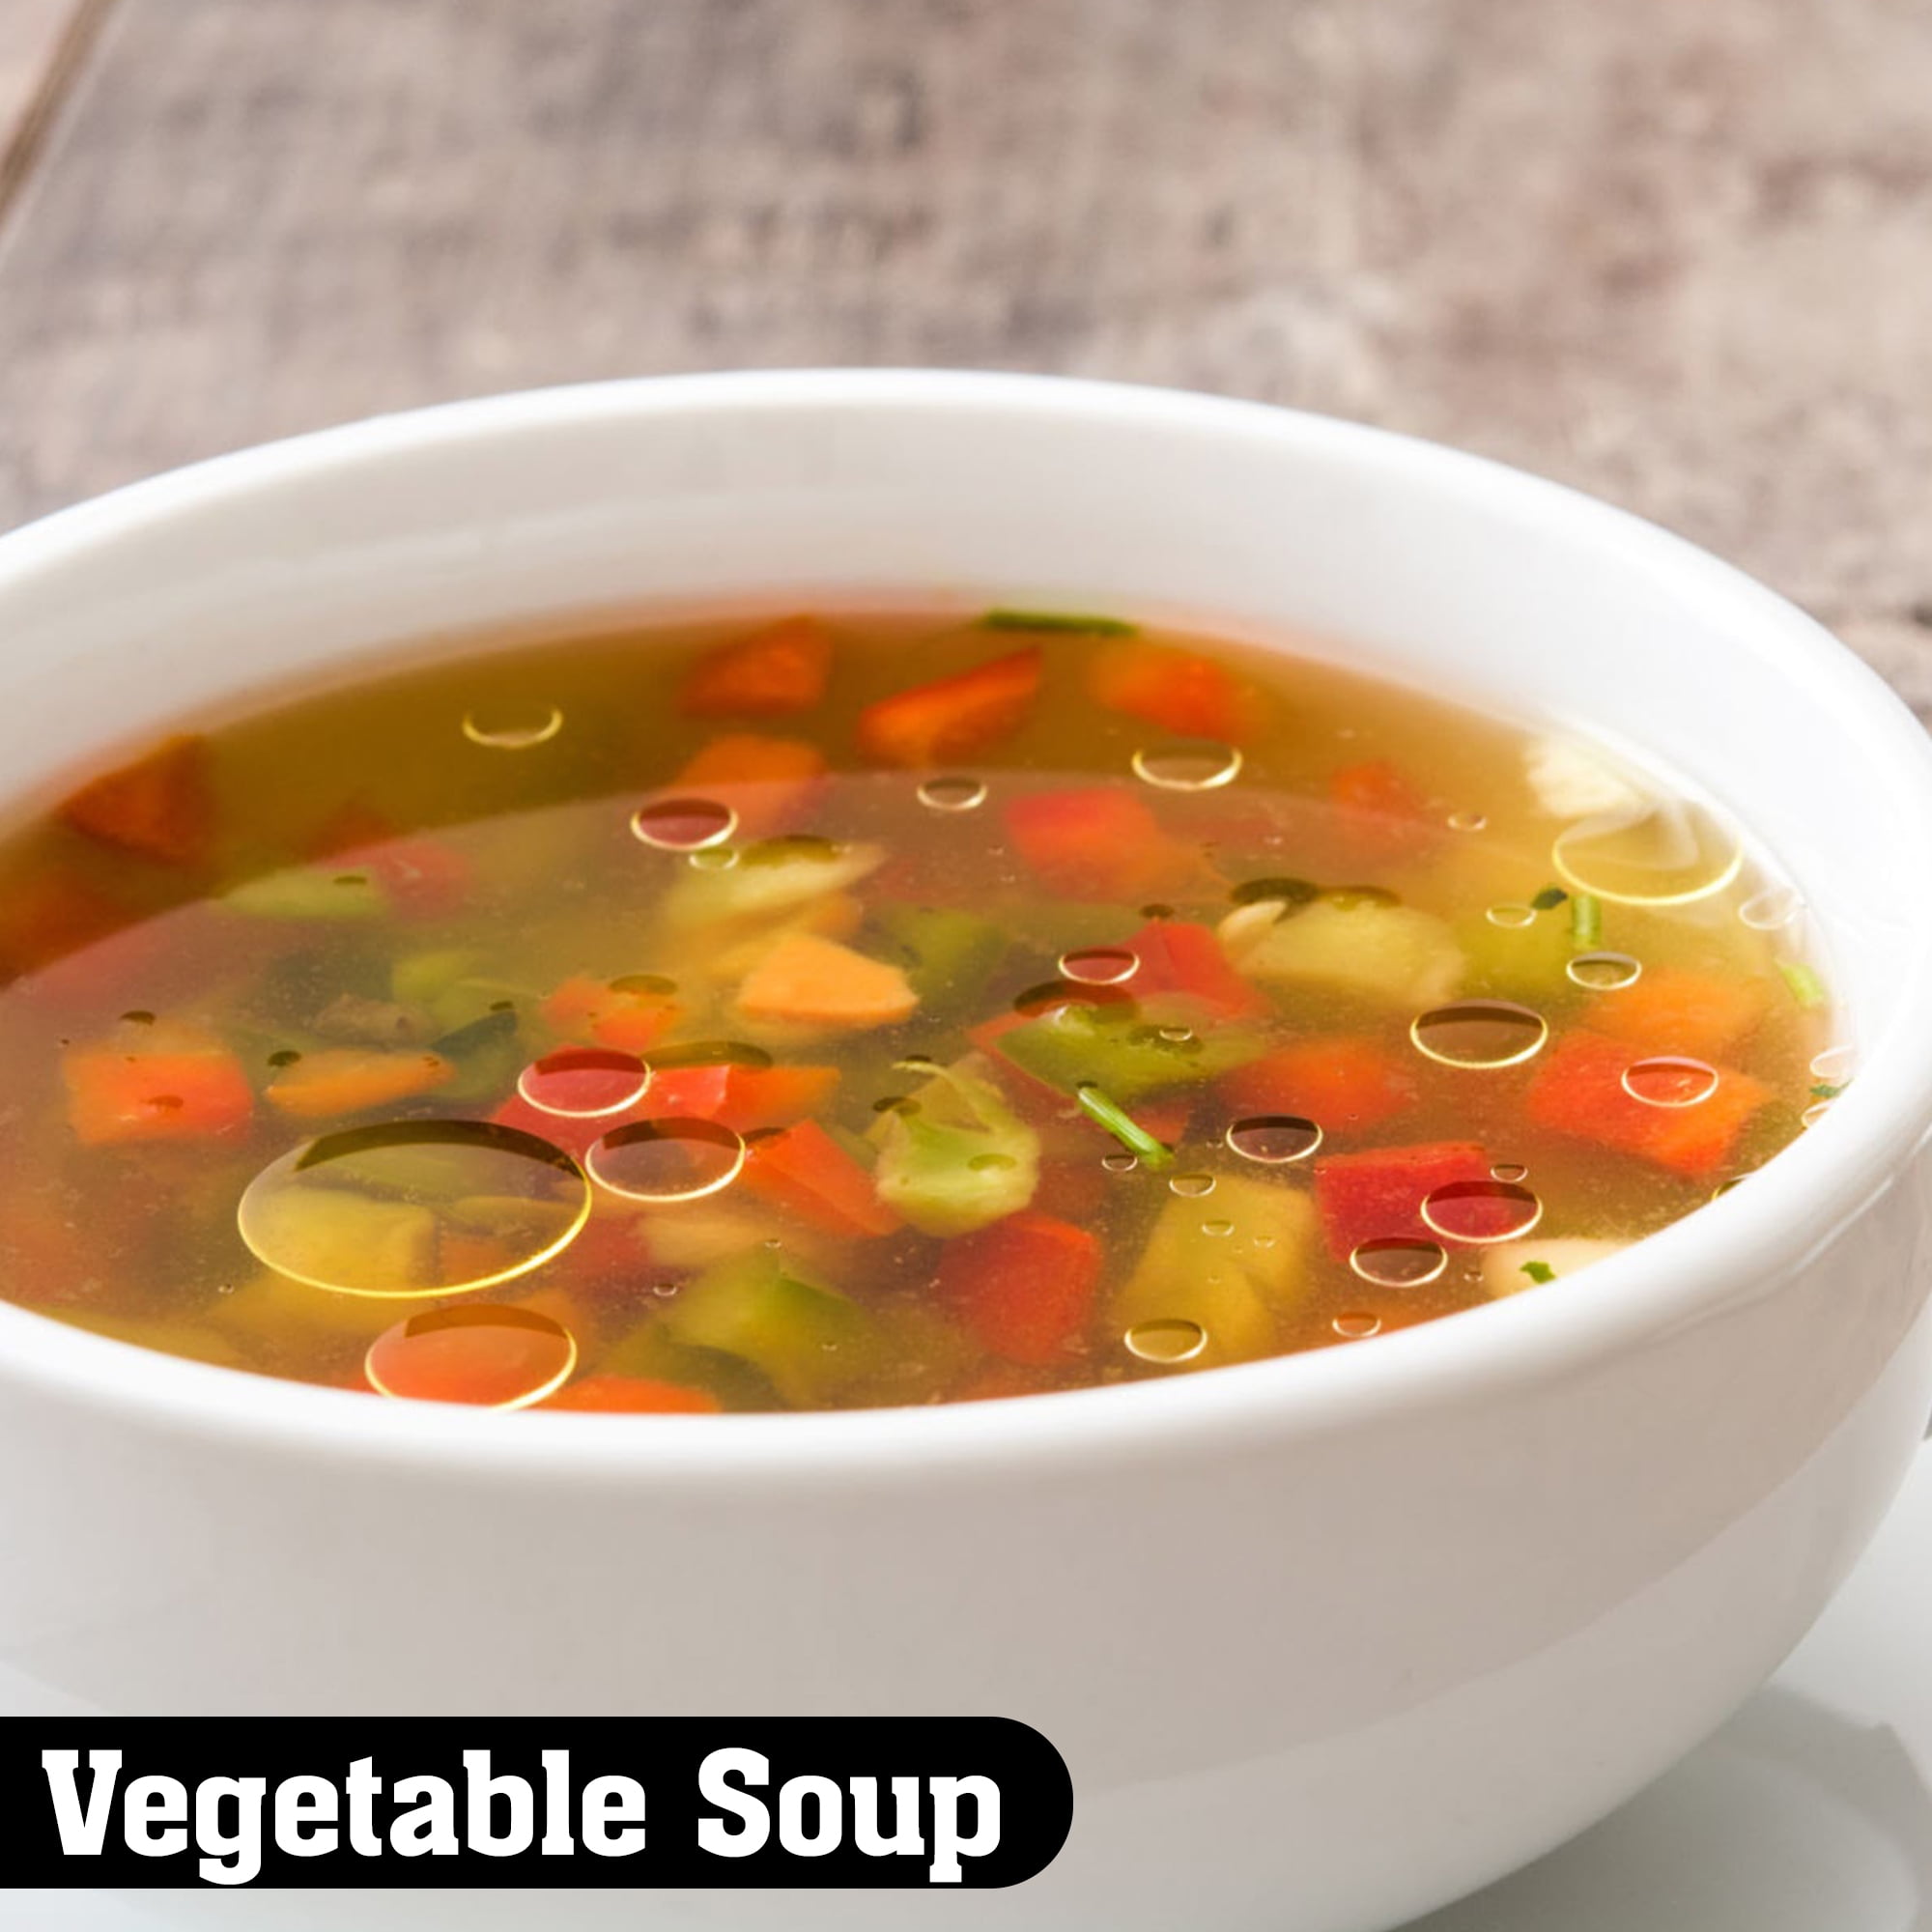 Vegetable Soup Mix - 4 oz - Dried Vegetables for All Kind of Soups 8 oz